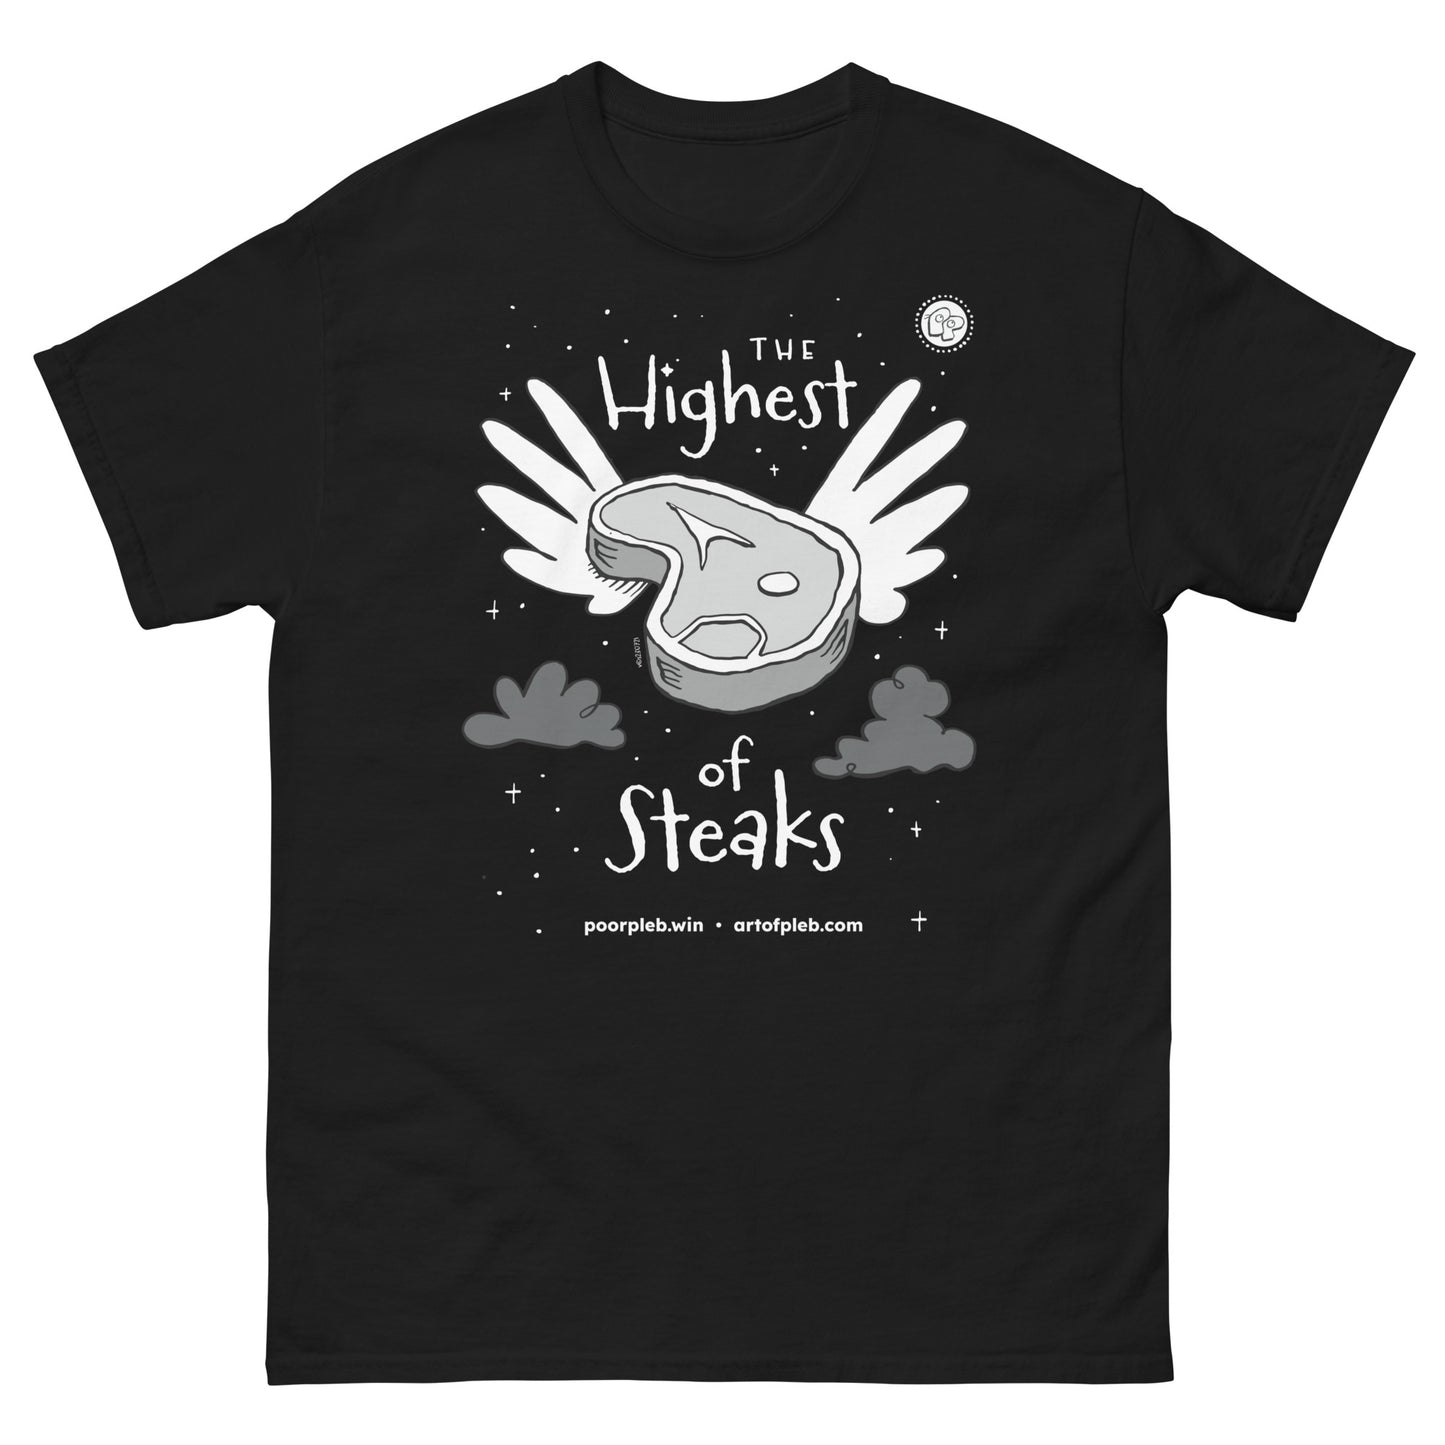 Poor Pleb Highest of Steaks Monochrome - Black T-shirt